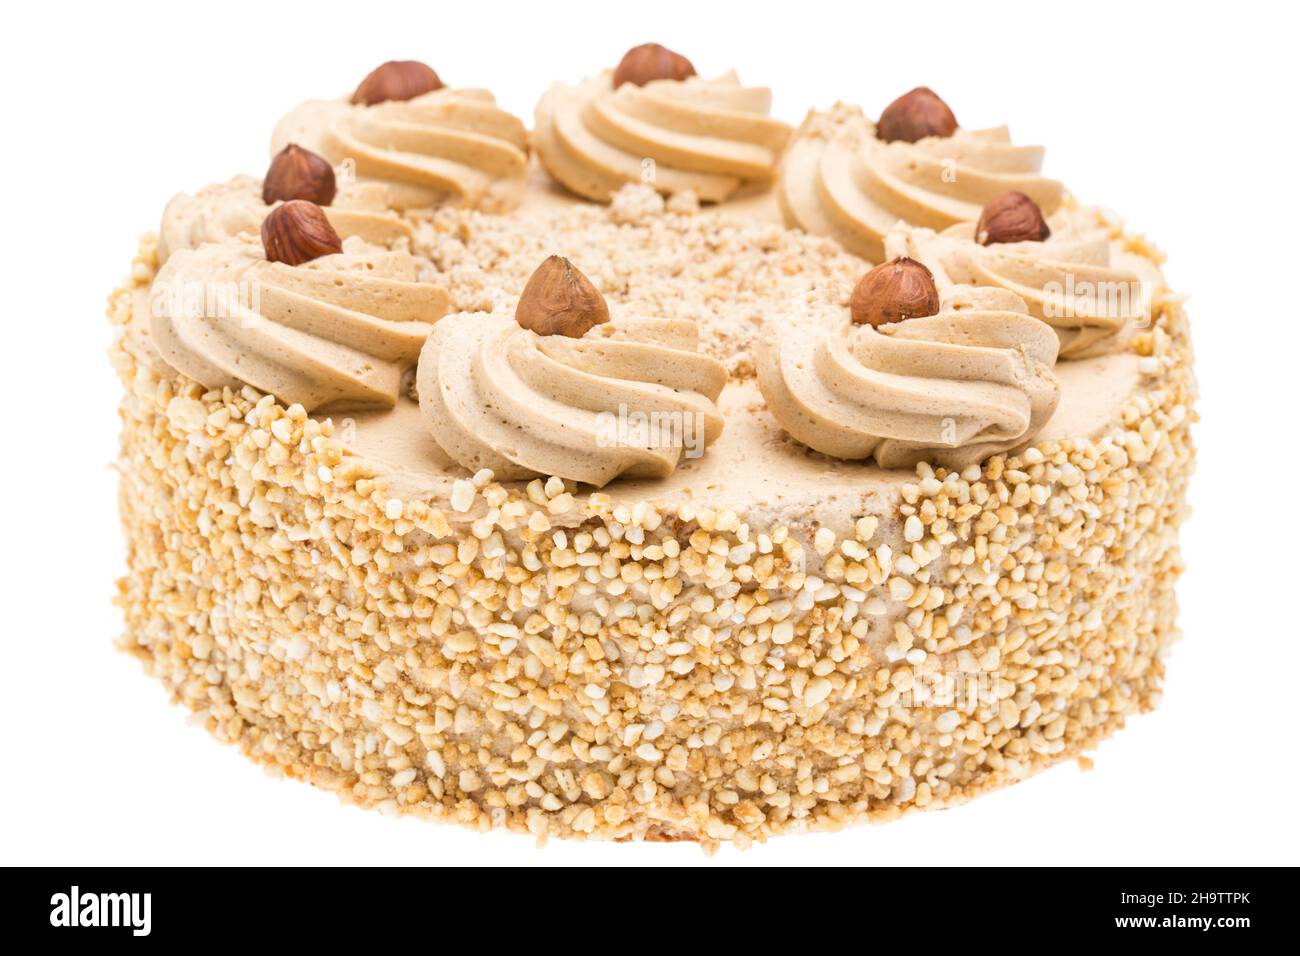 nut cake, walnut cake, walnut walnuts, nut, nuts, nutty, brittle, background, white, cake, decorating, cream, brown, dessert, optional, piece, real, f Stock Photo